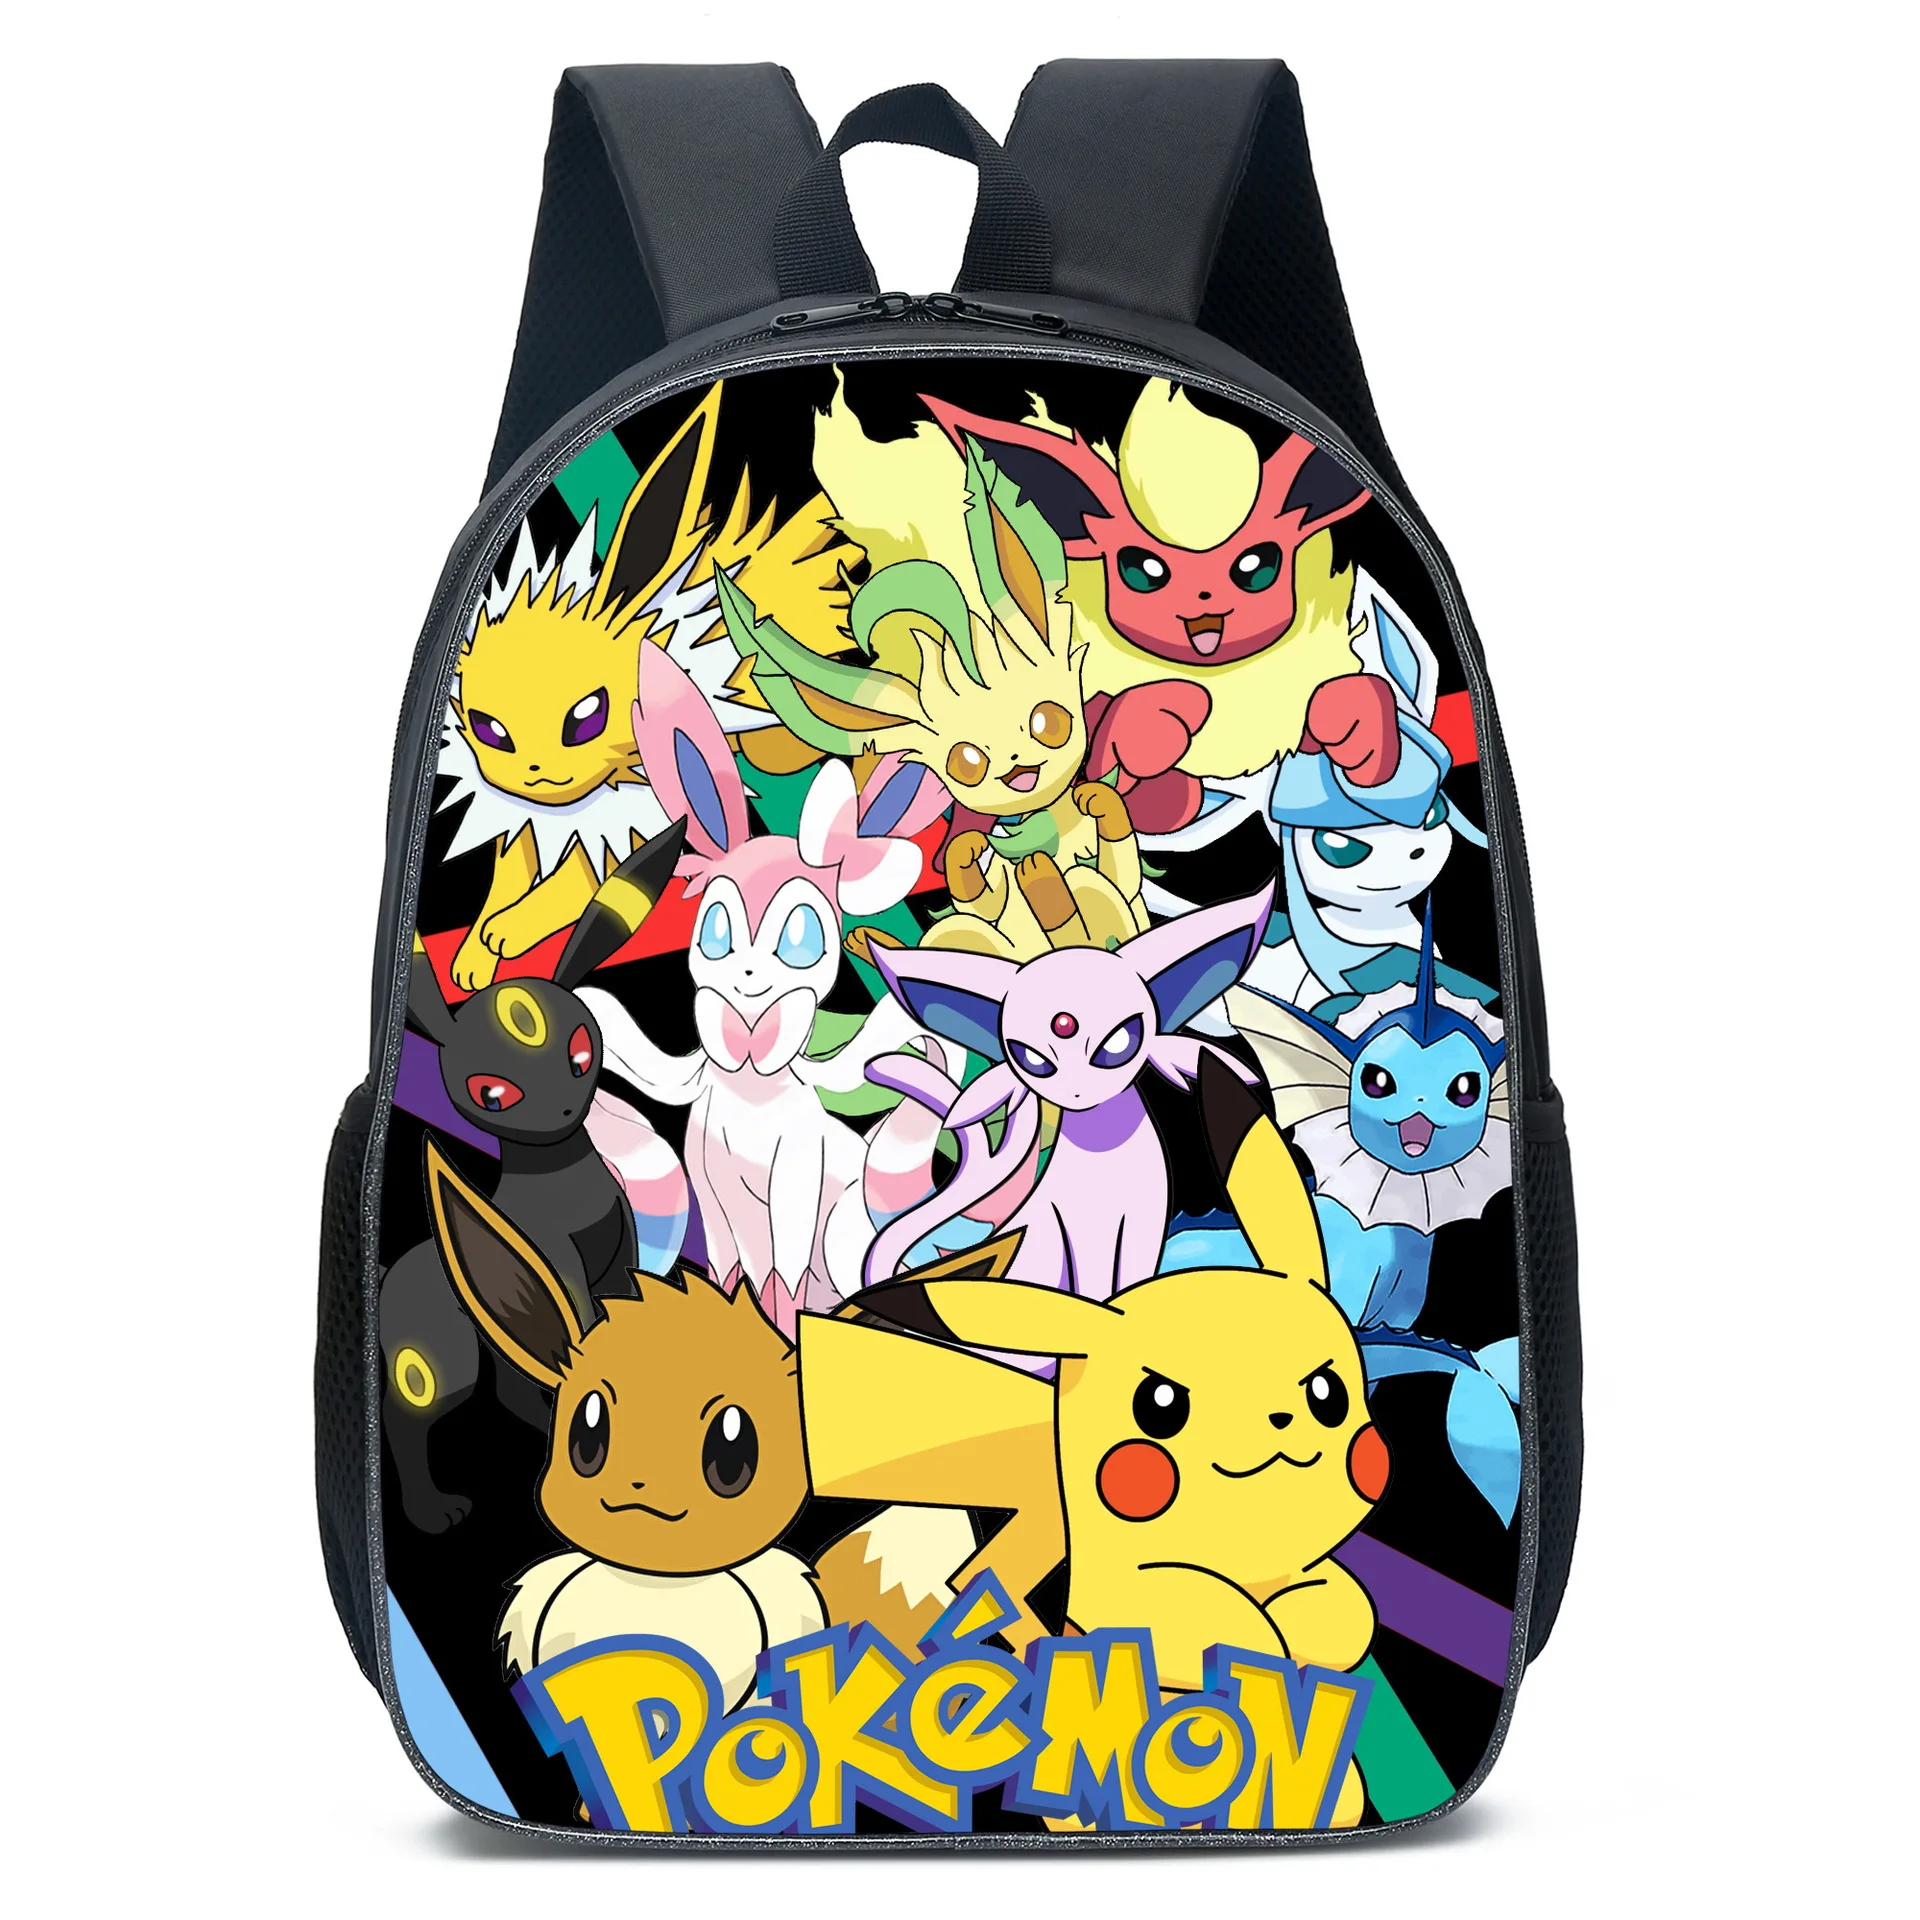 Pokemon Pikachu School Bag Crianças 1 ° Para 3 ° Grau Leve Dacron Moda  Criativa Reflexiva Impermeável Respirável Mochila - AliExpress